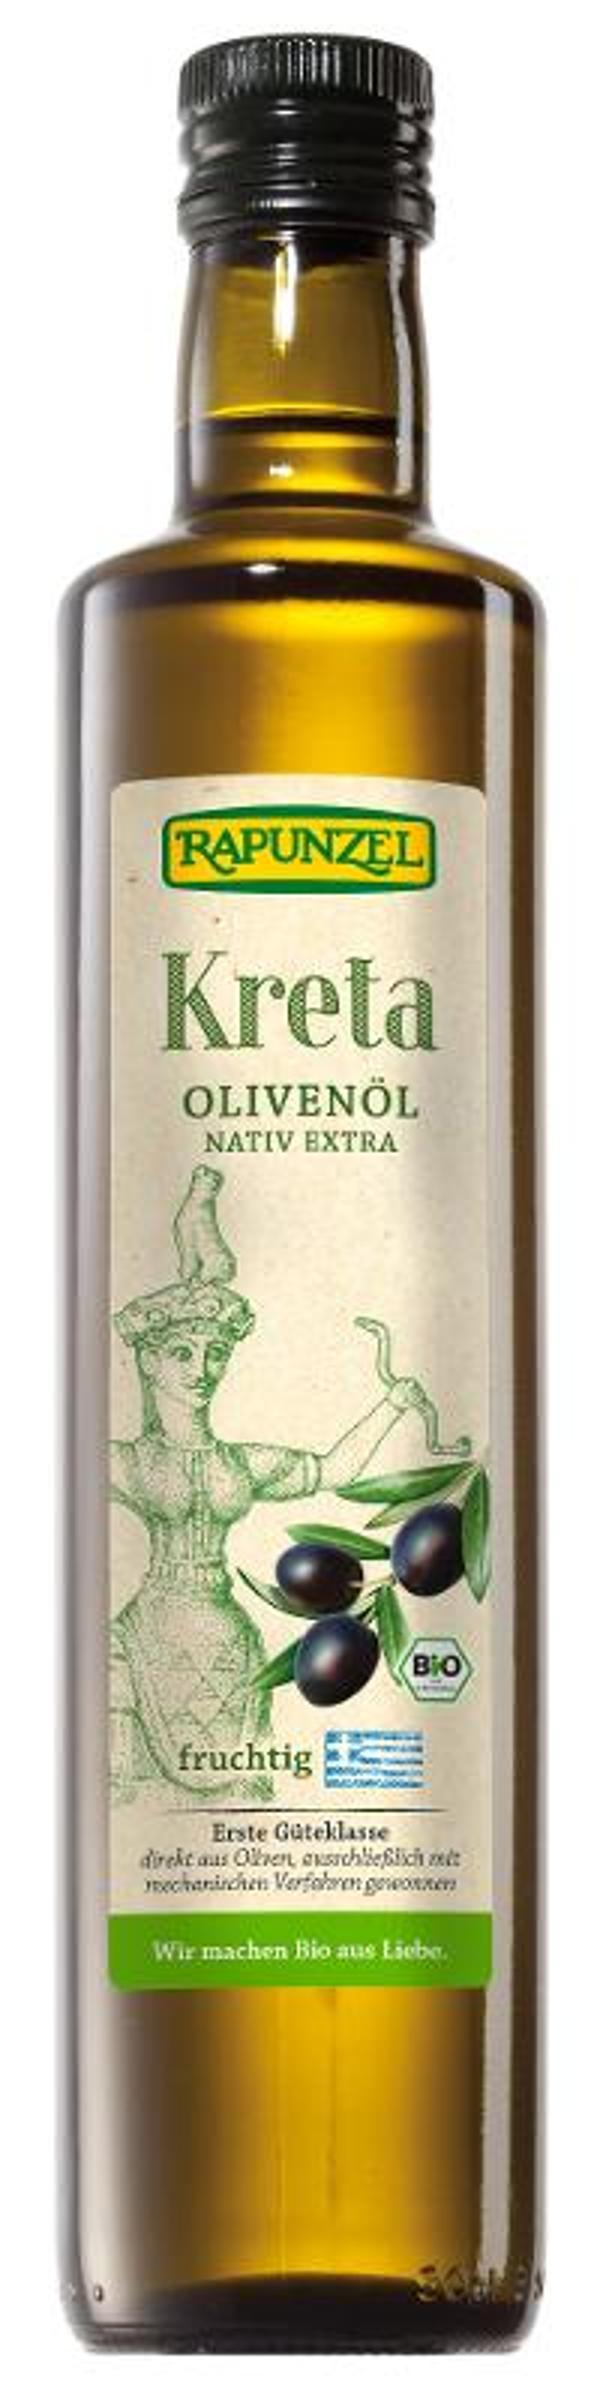 Produktfoto zu Olivenöl Kreta P.D.O., nativ e